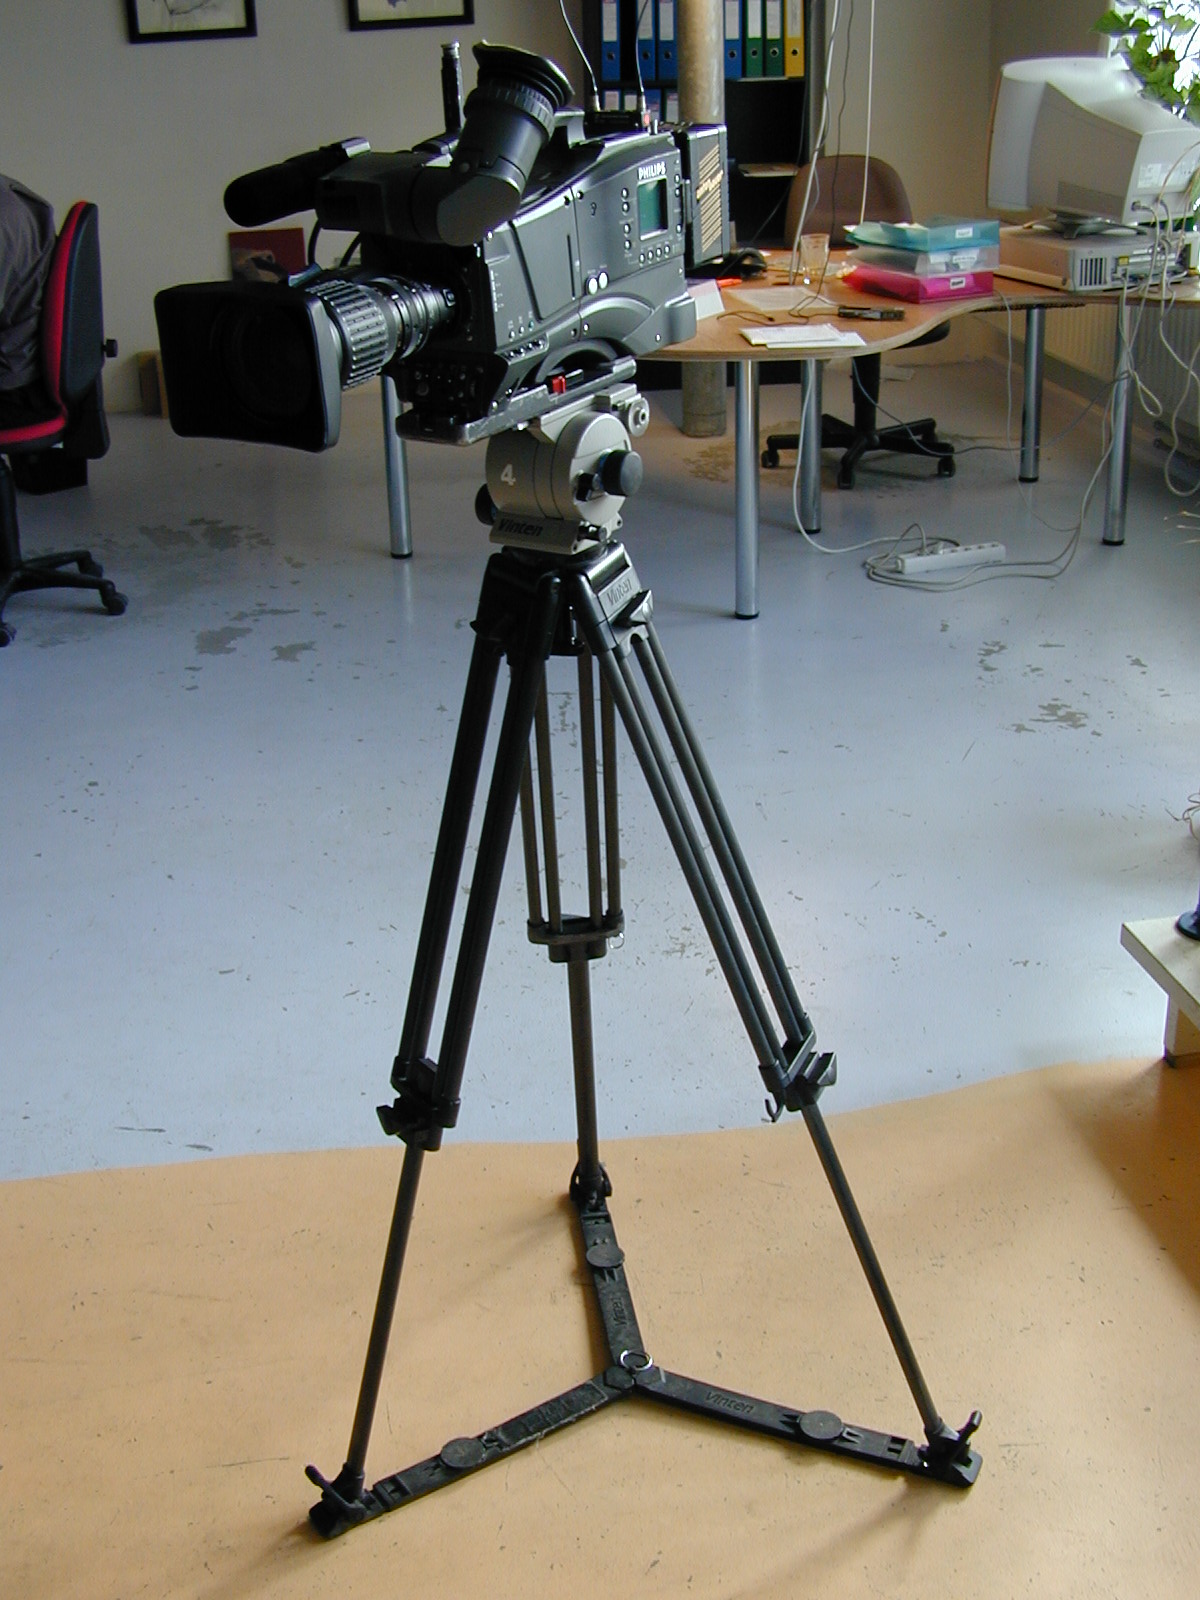 Image*After : images : camera professional tripod lens film filming